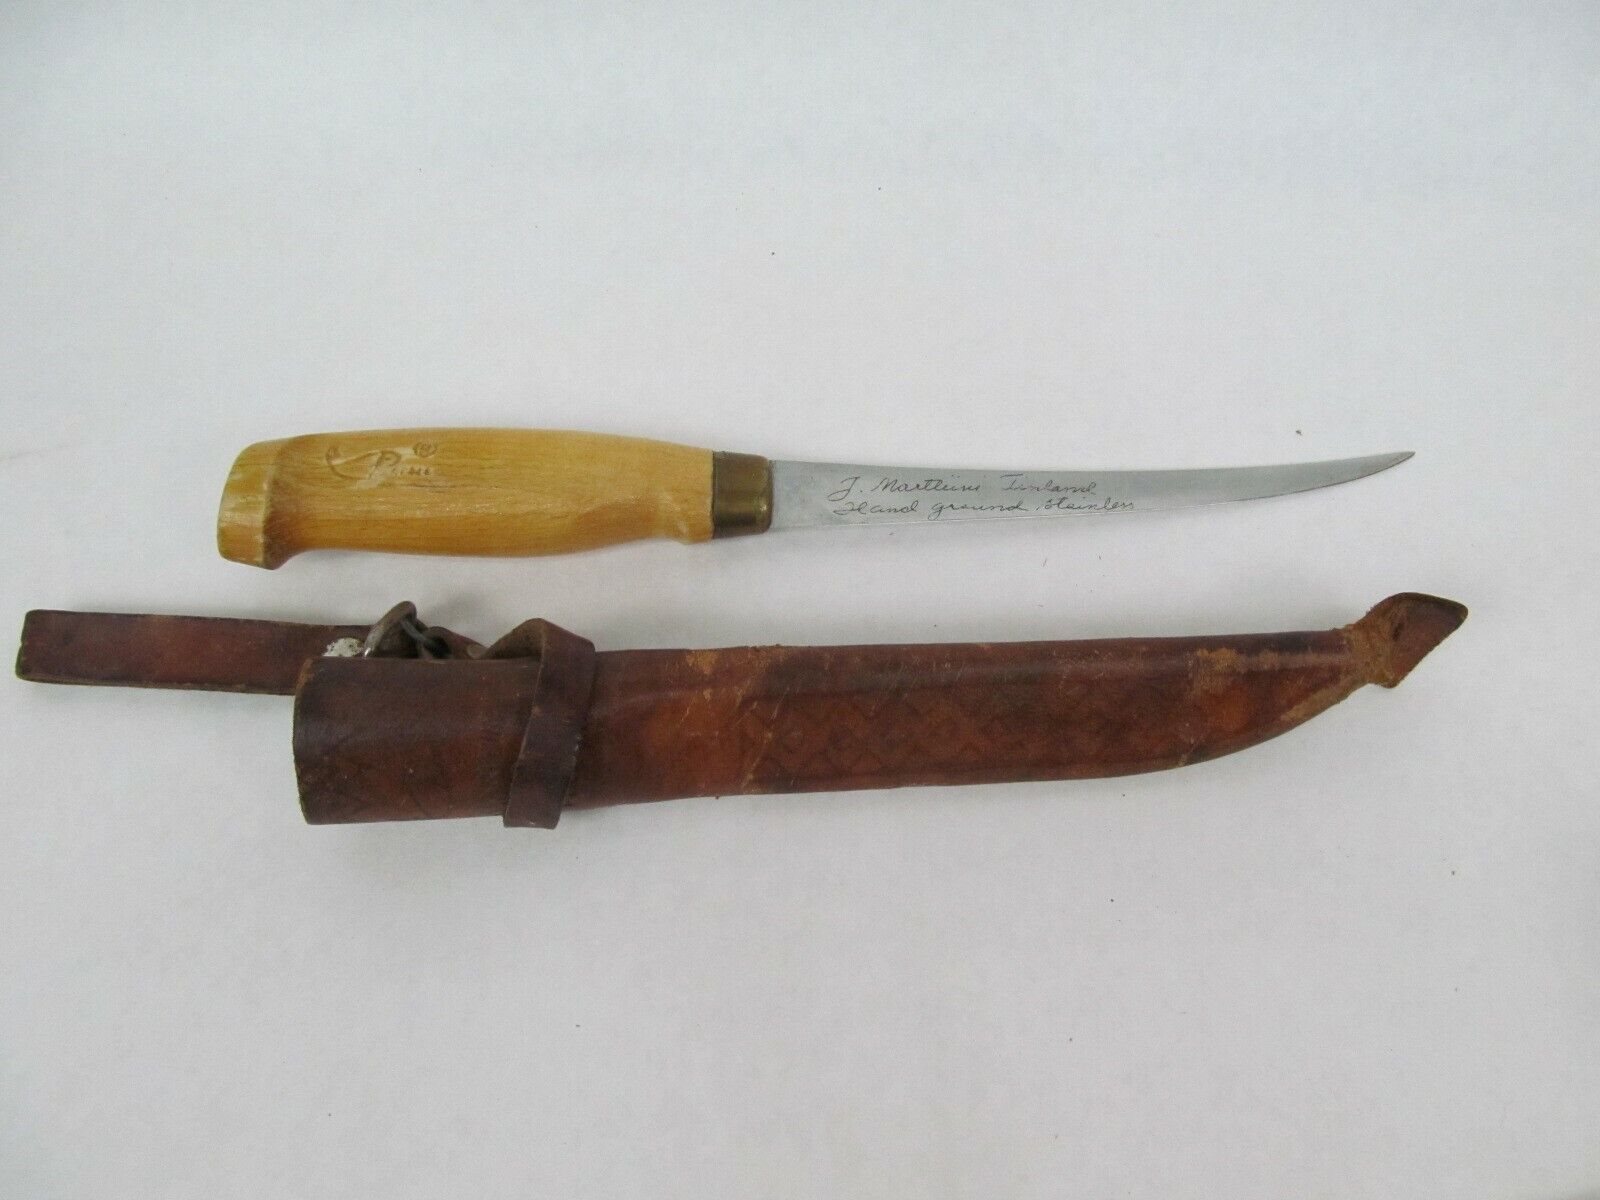 Vintage Rapala J. Marttini Finland Filet Fishing Knife (about 6” blade)